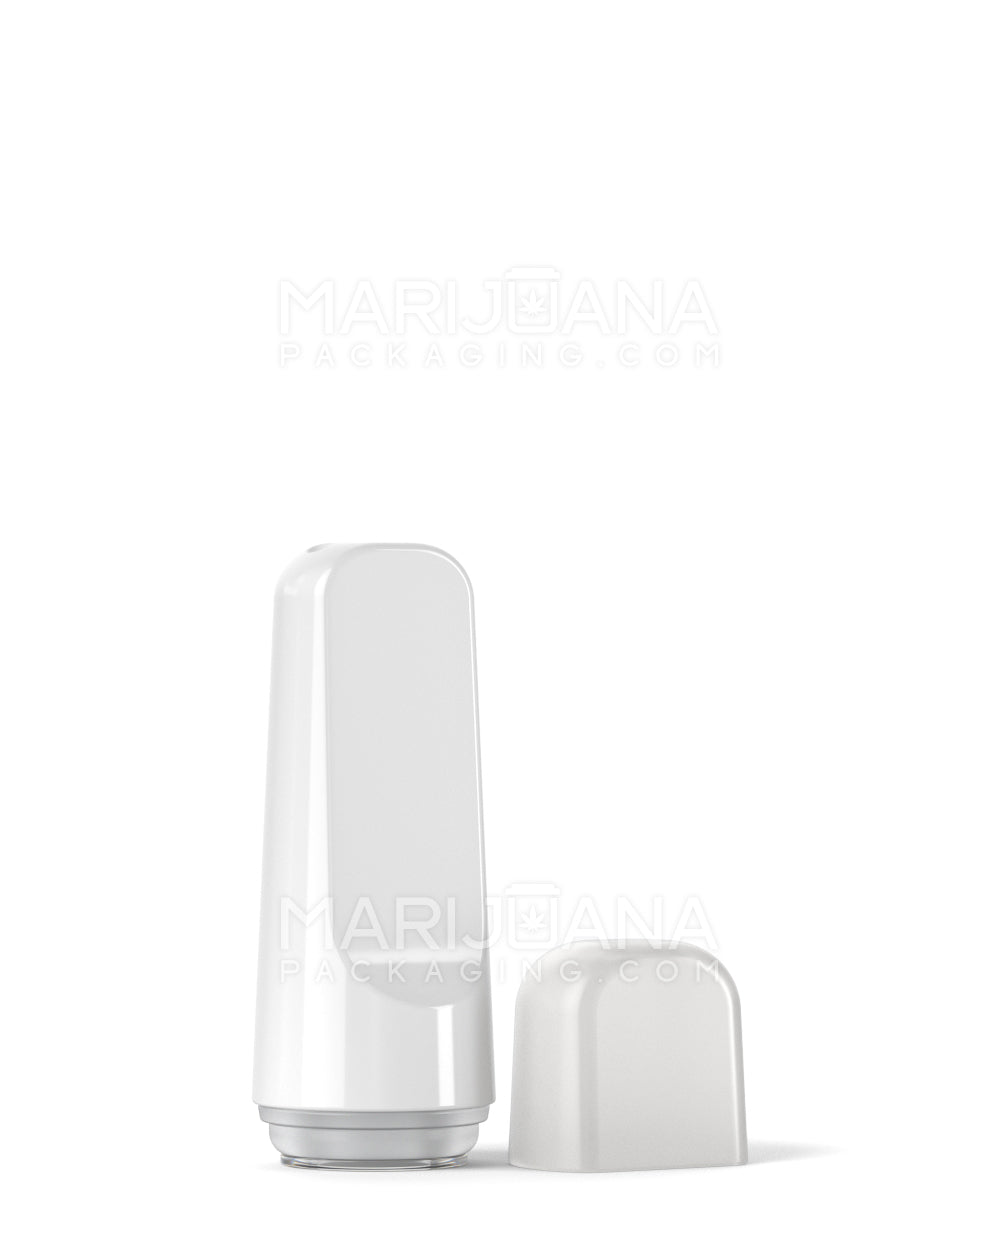 RAE | Flat Vape Mouthpiece for Hand Press Plastic Cartridges | White Plastic - Hand Press - 400 Count - 8